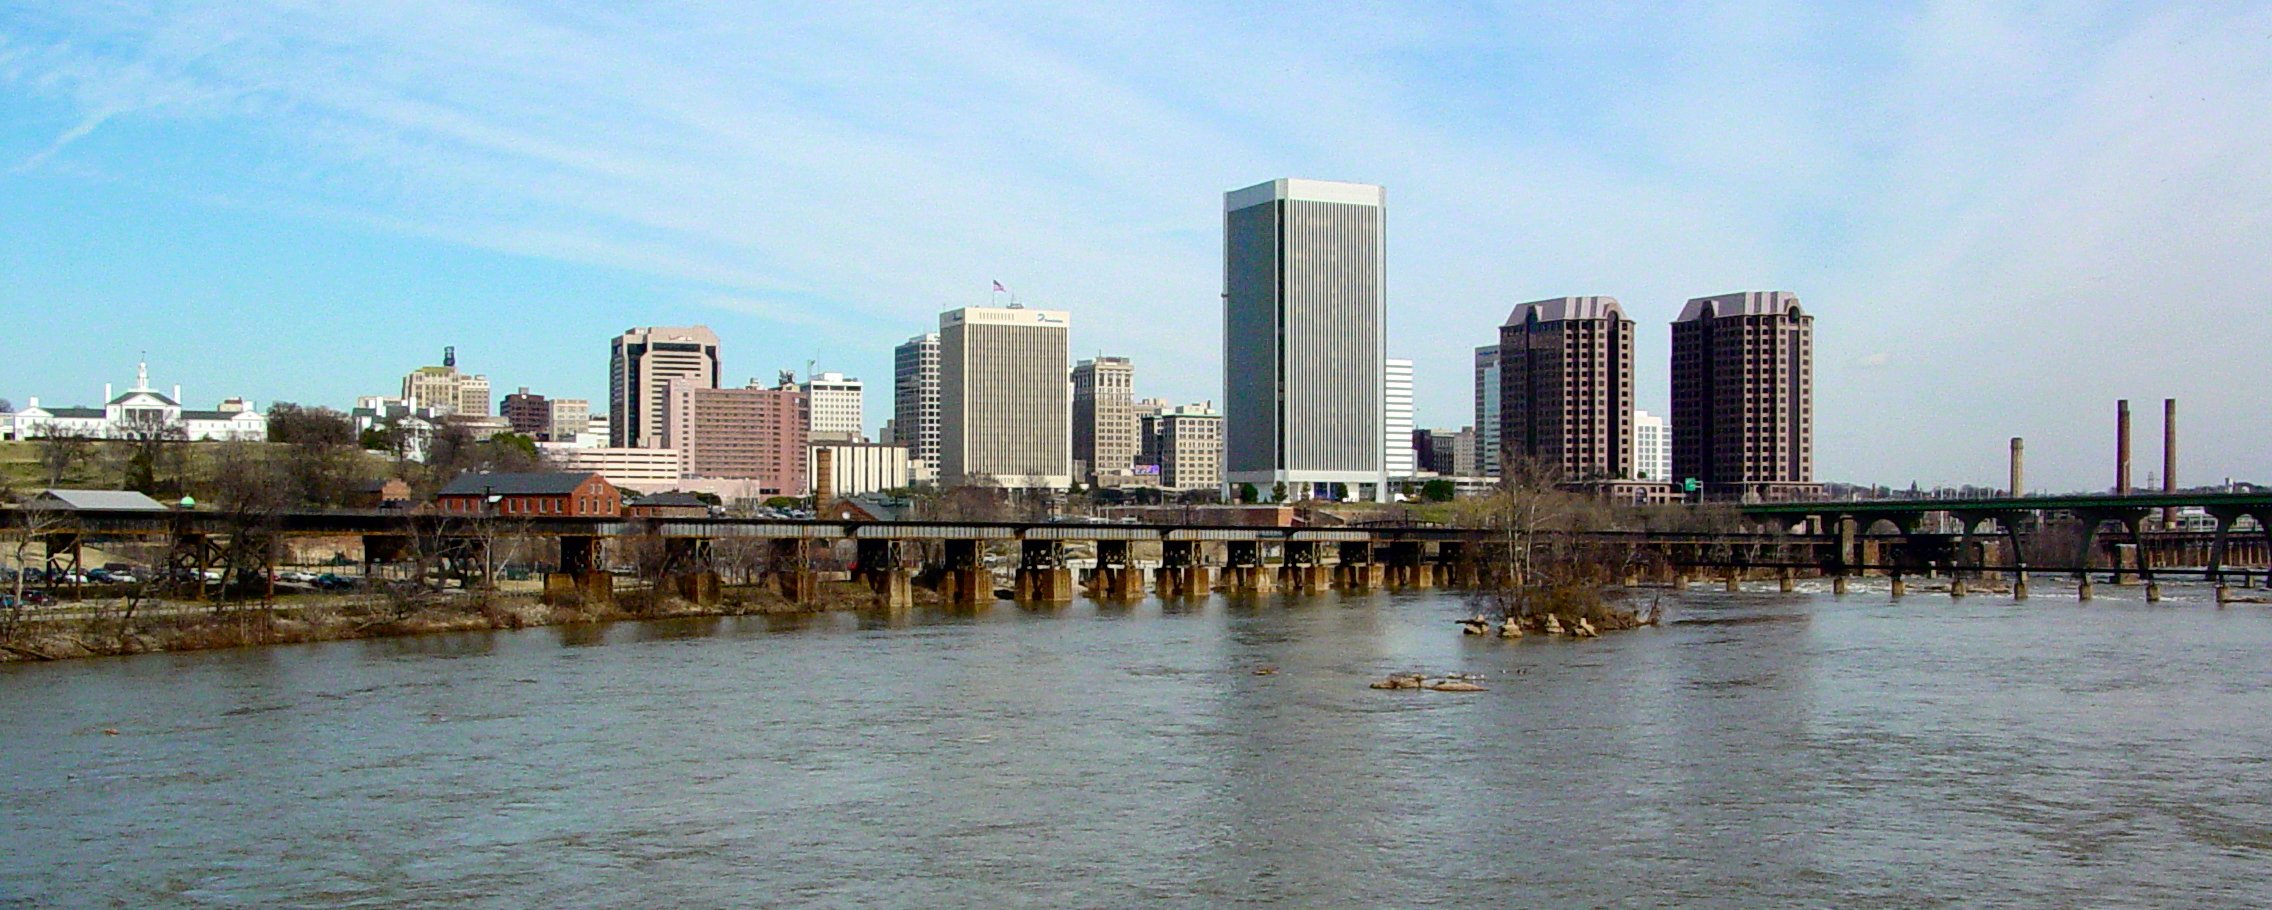 File:Richmond, Virginia skyline.jpg - Wikimedia Commons